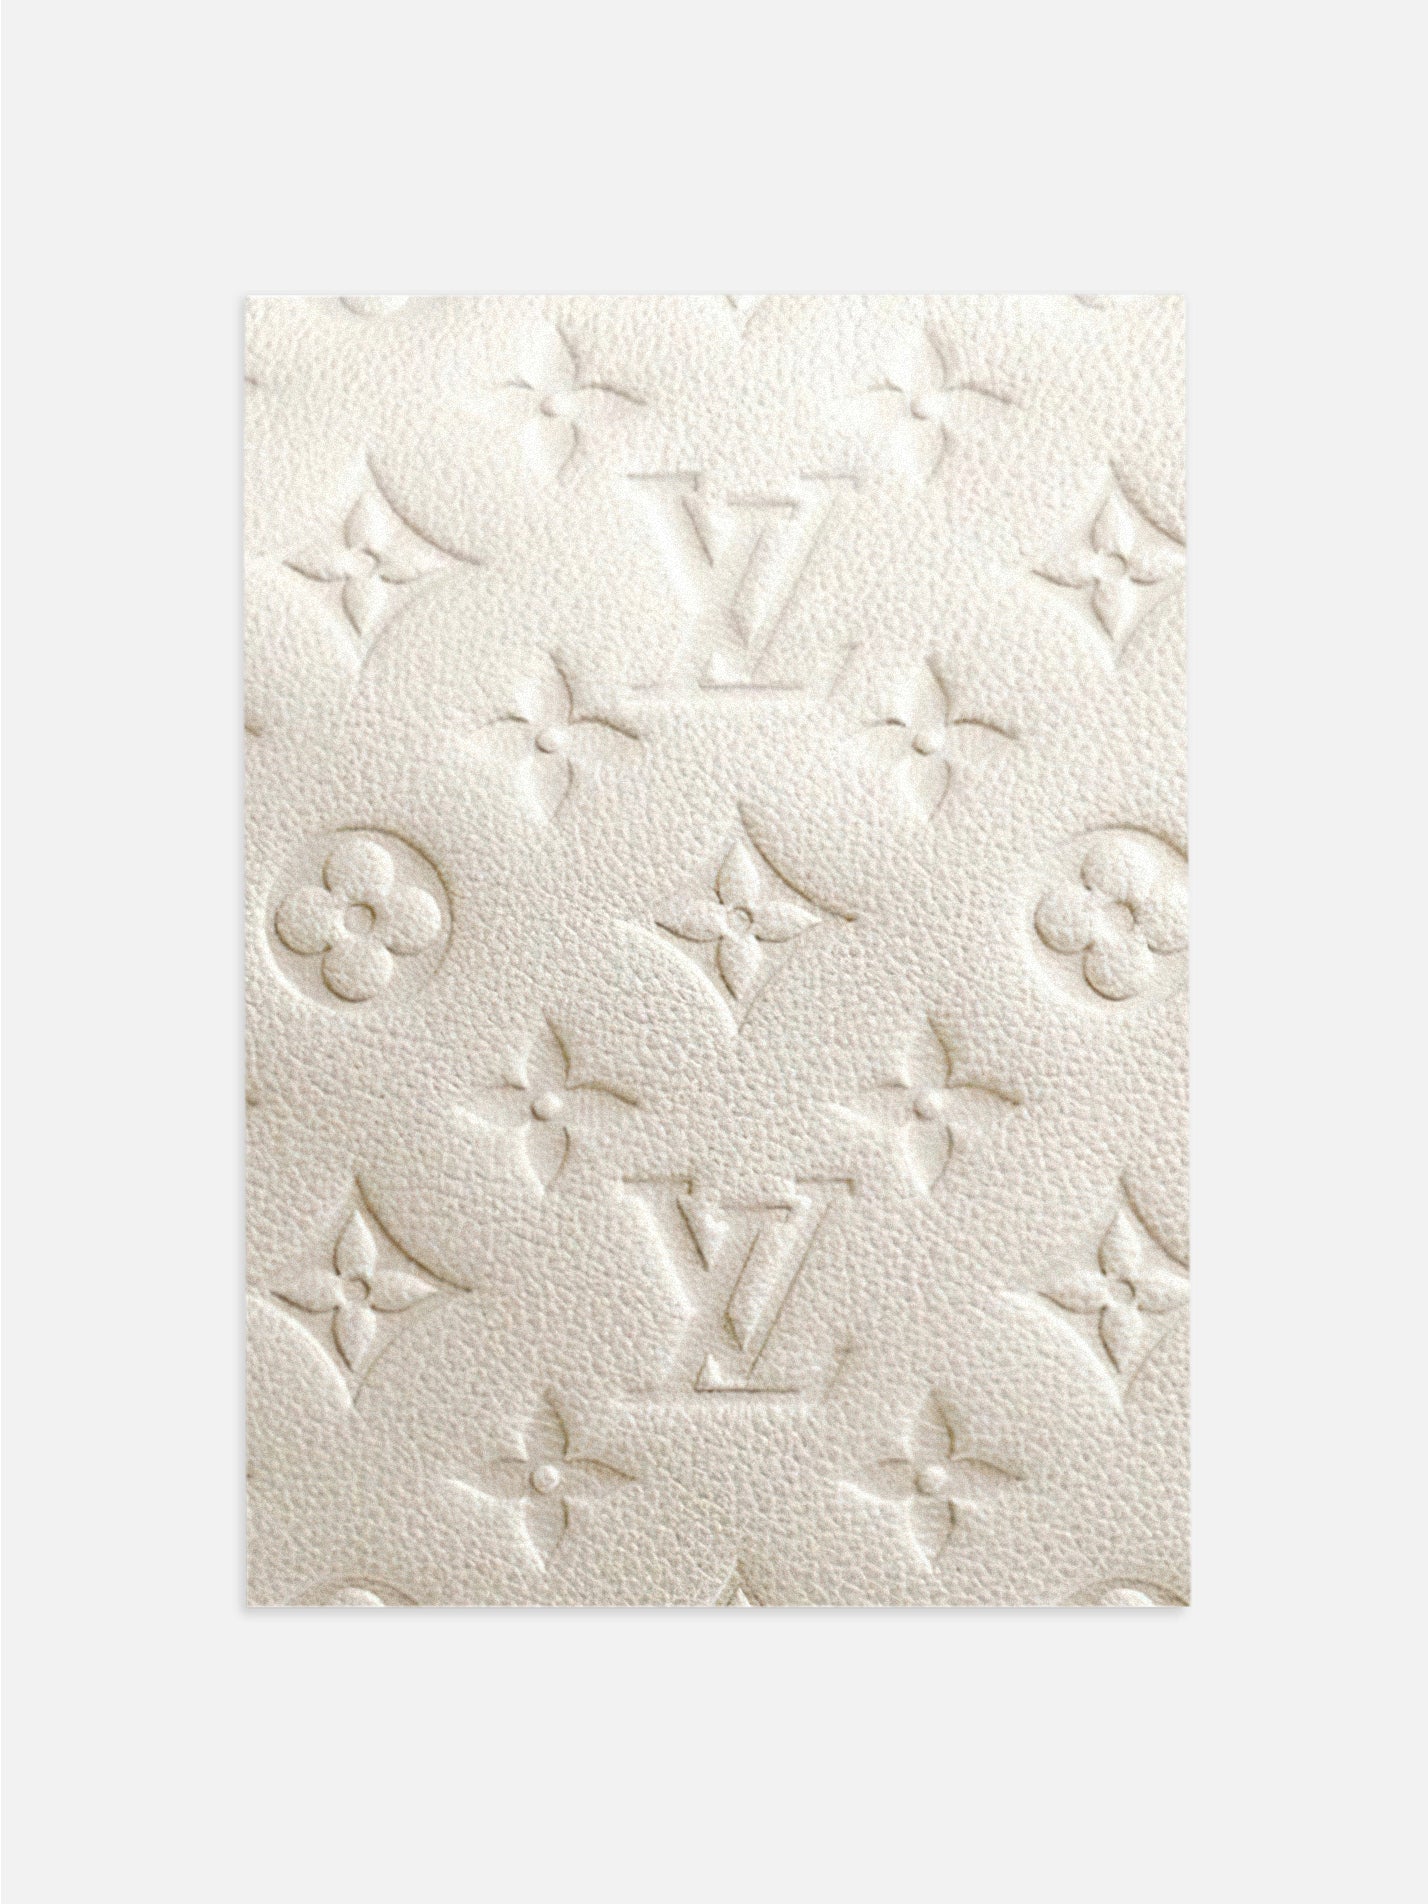 Louis Vuitton Leather